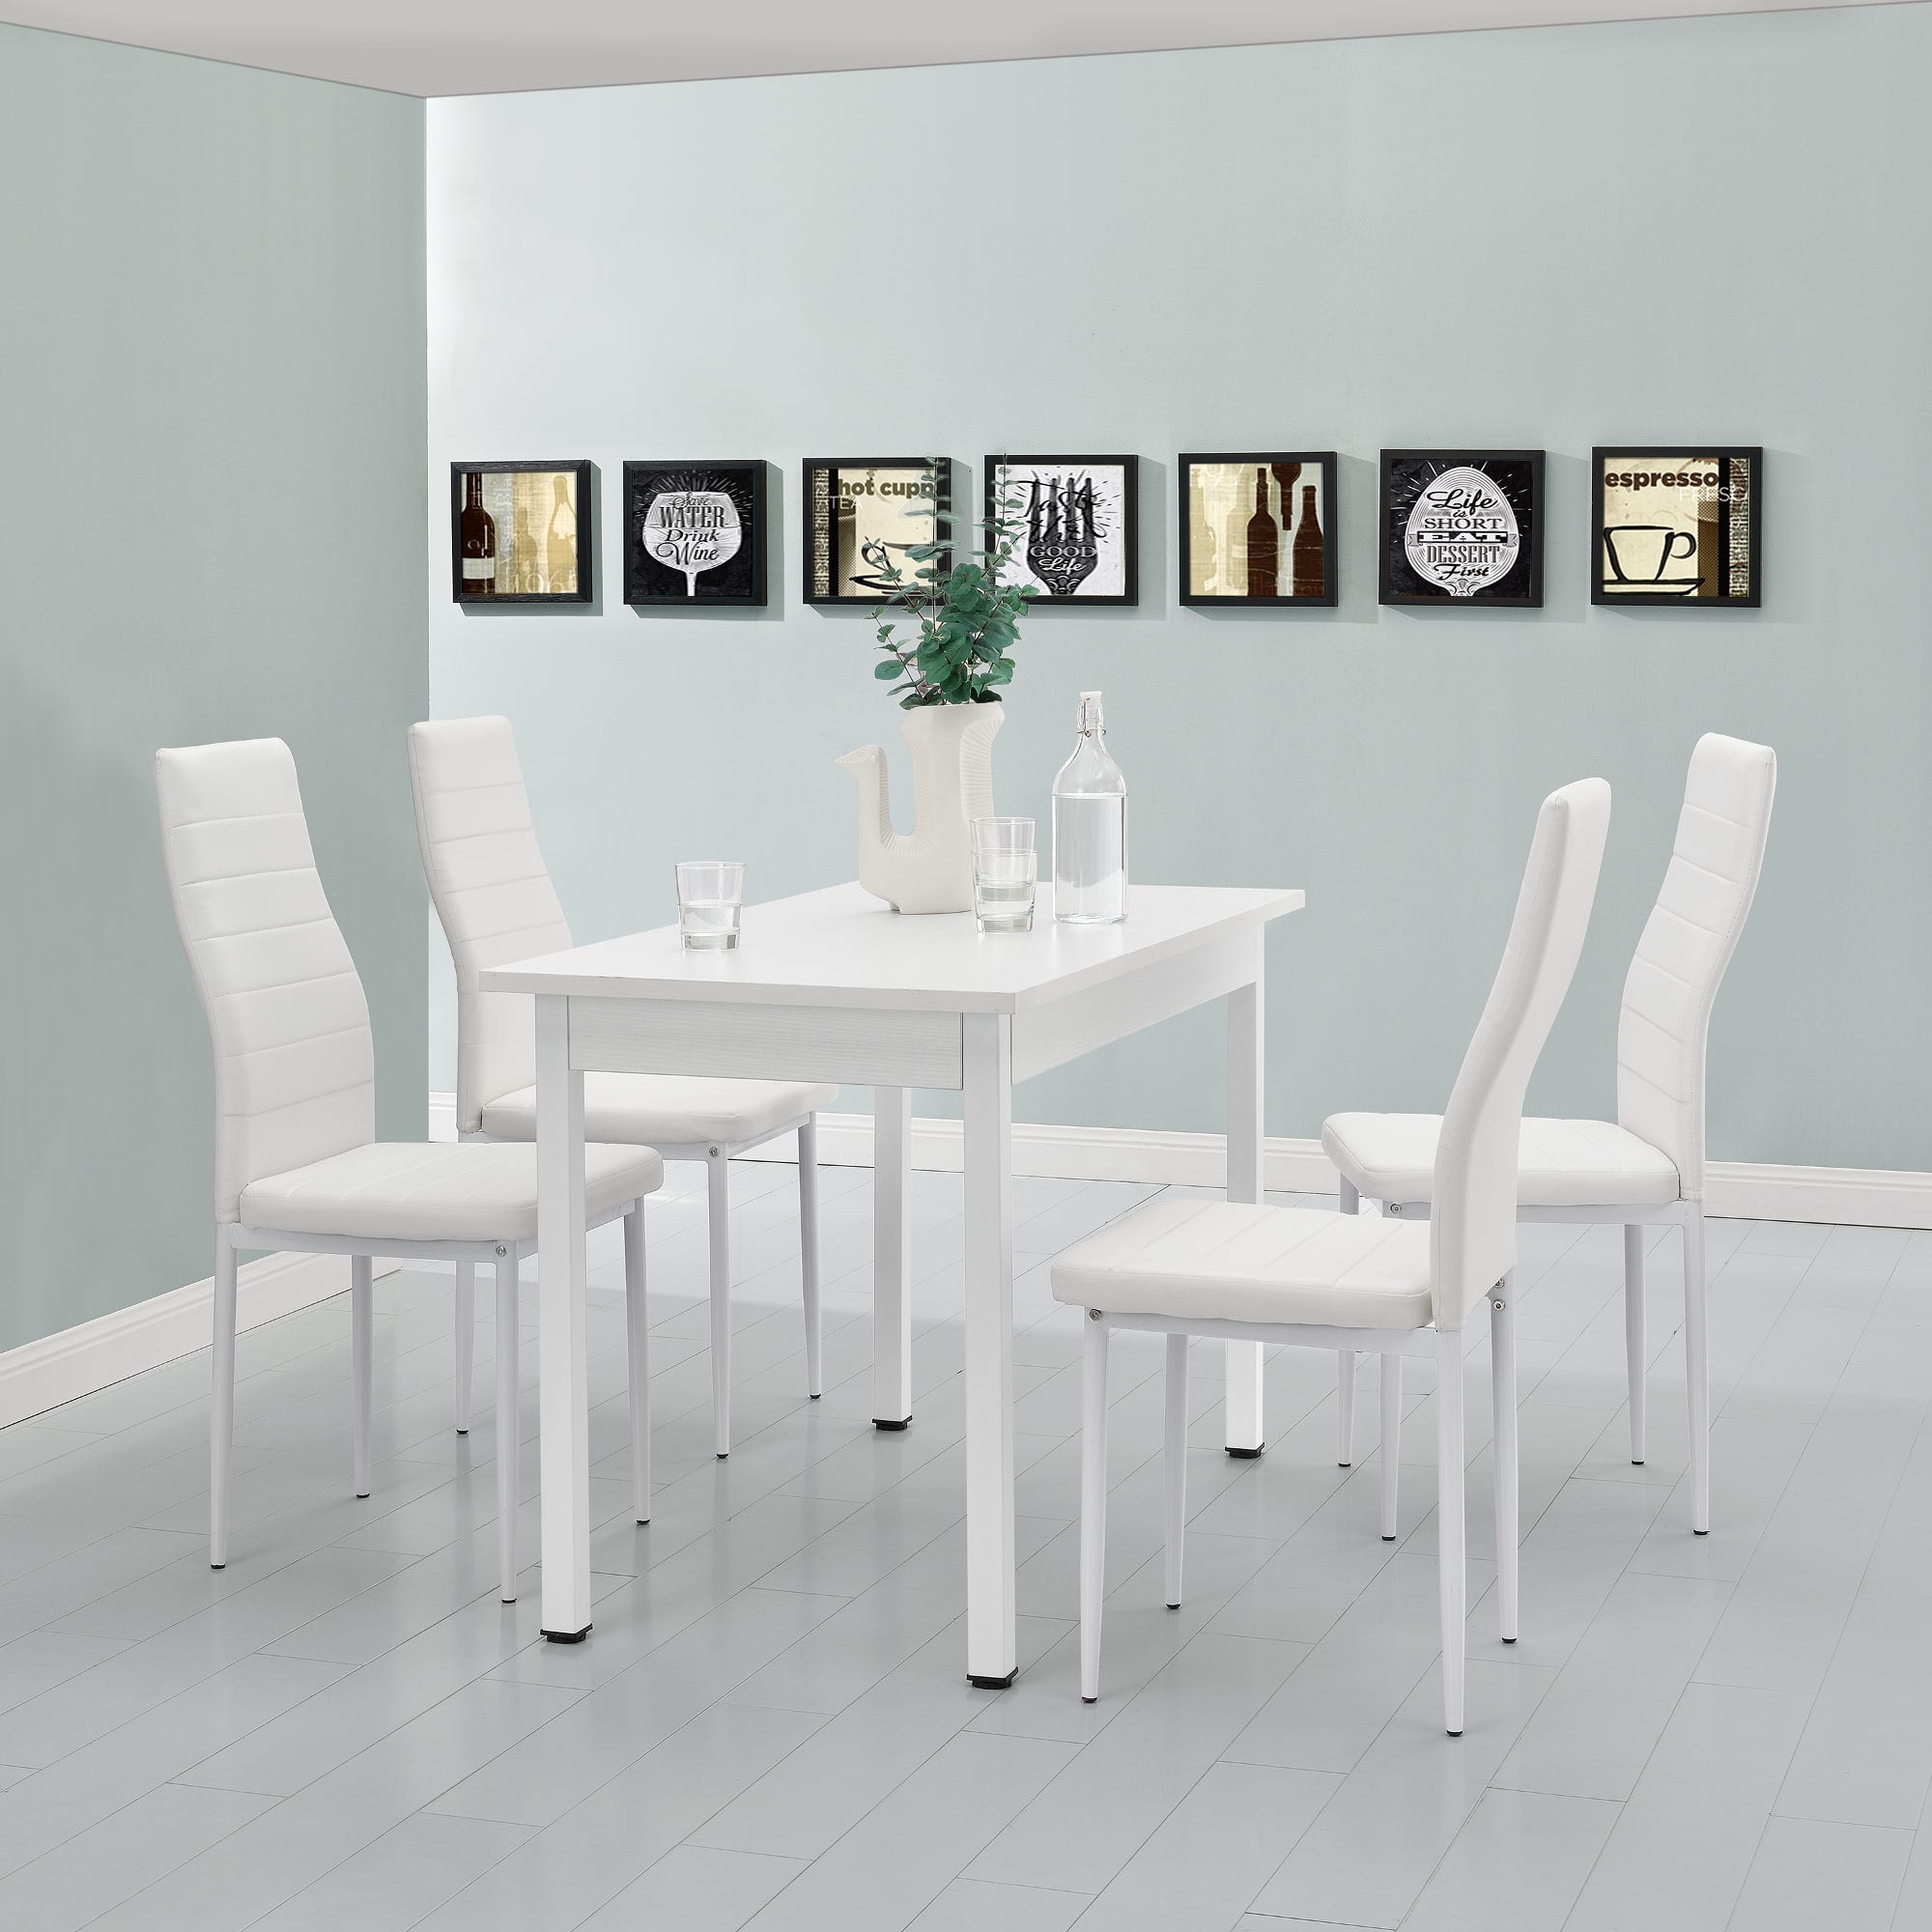 en.casa] Tavolo da pranzo bianco - 120x60cm - con 4 sedie